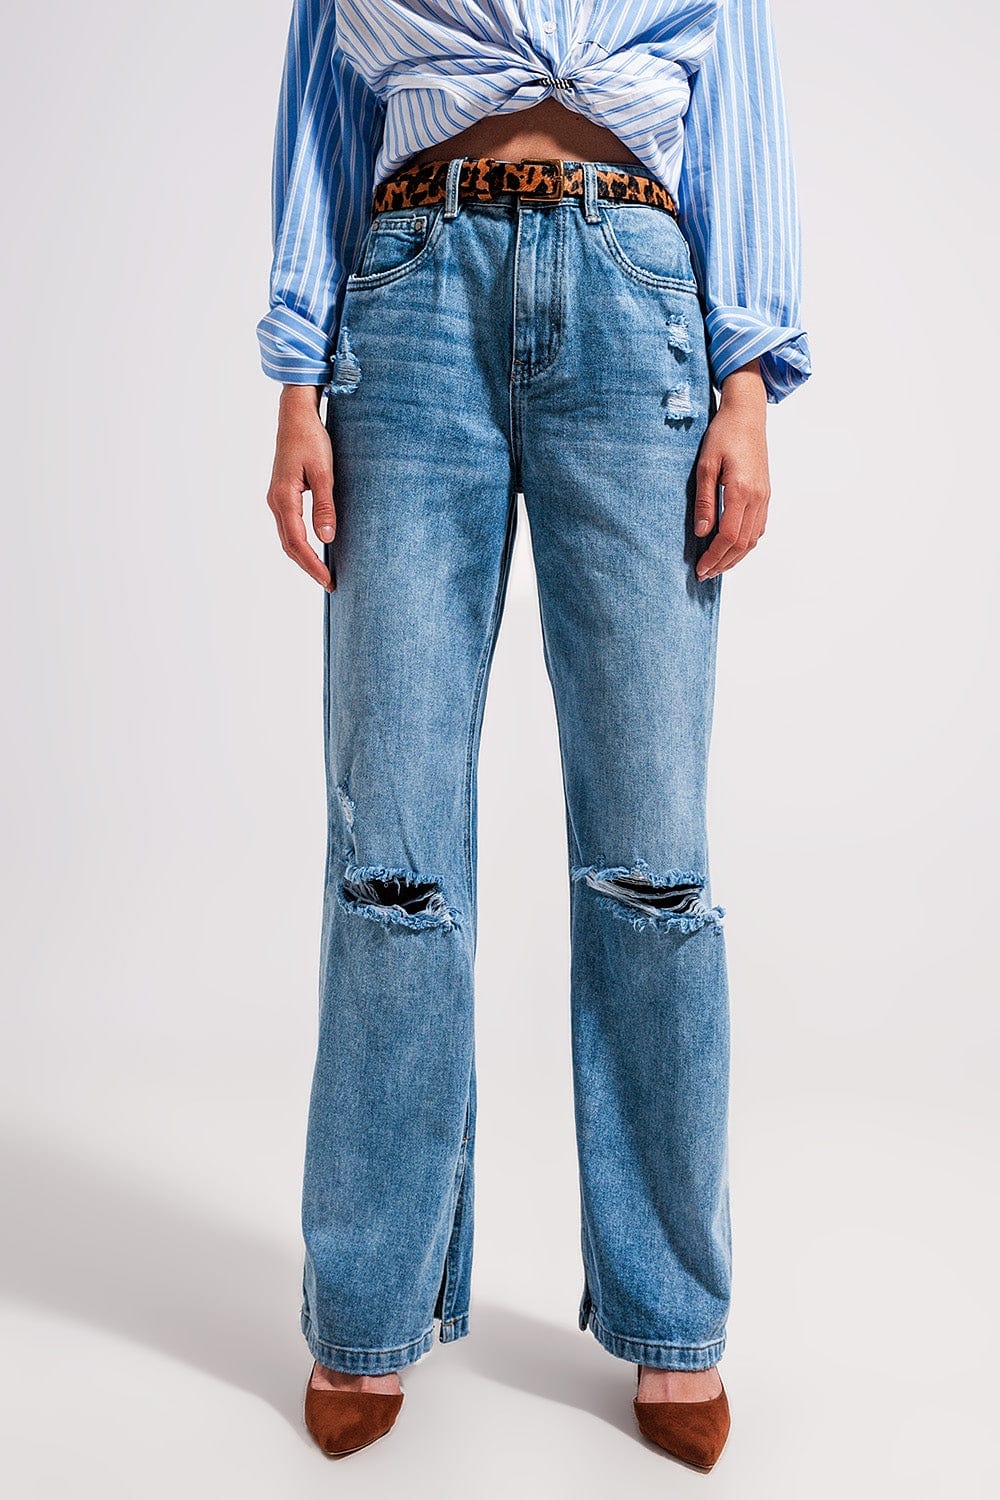 Q2 Jeans High waist jeans with split hem in vintage wash